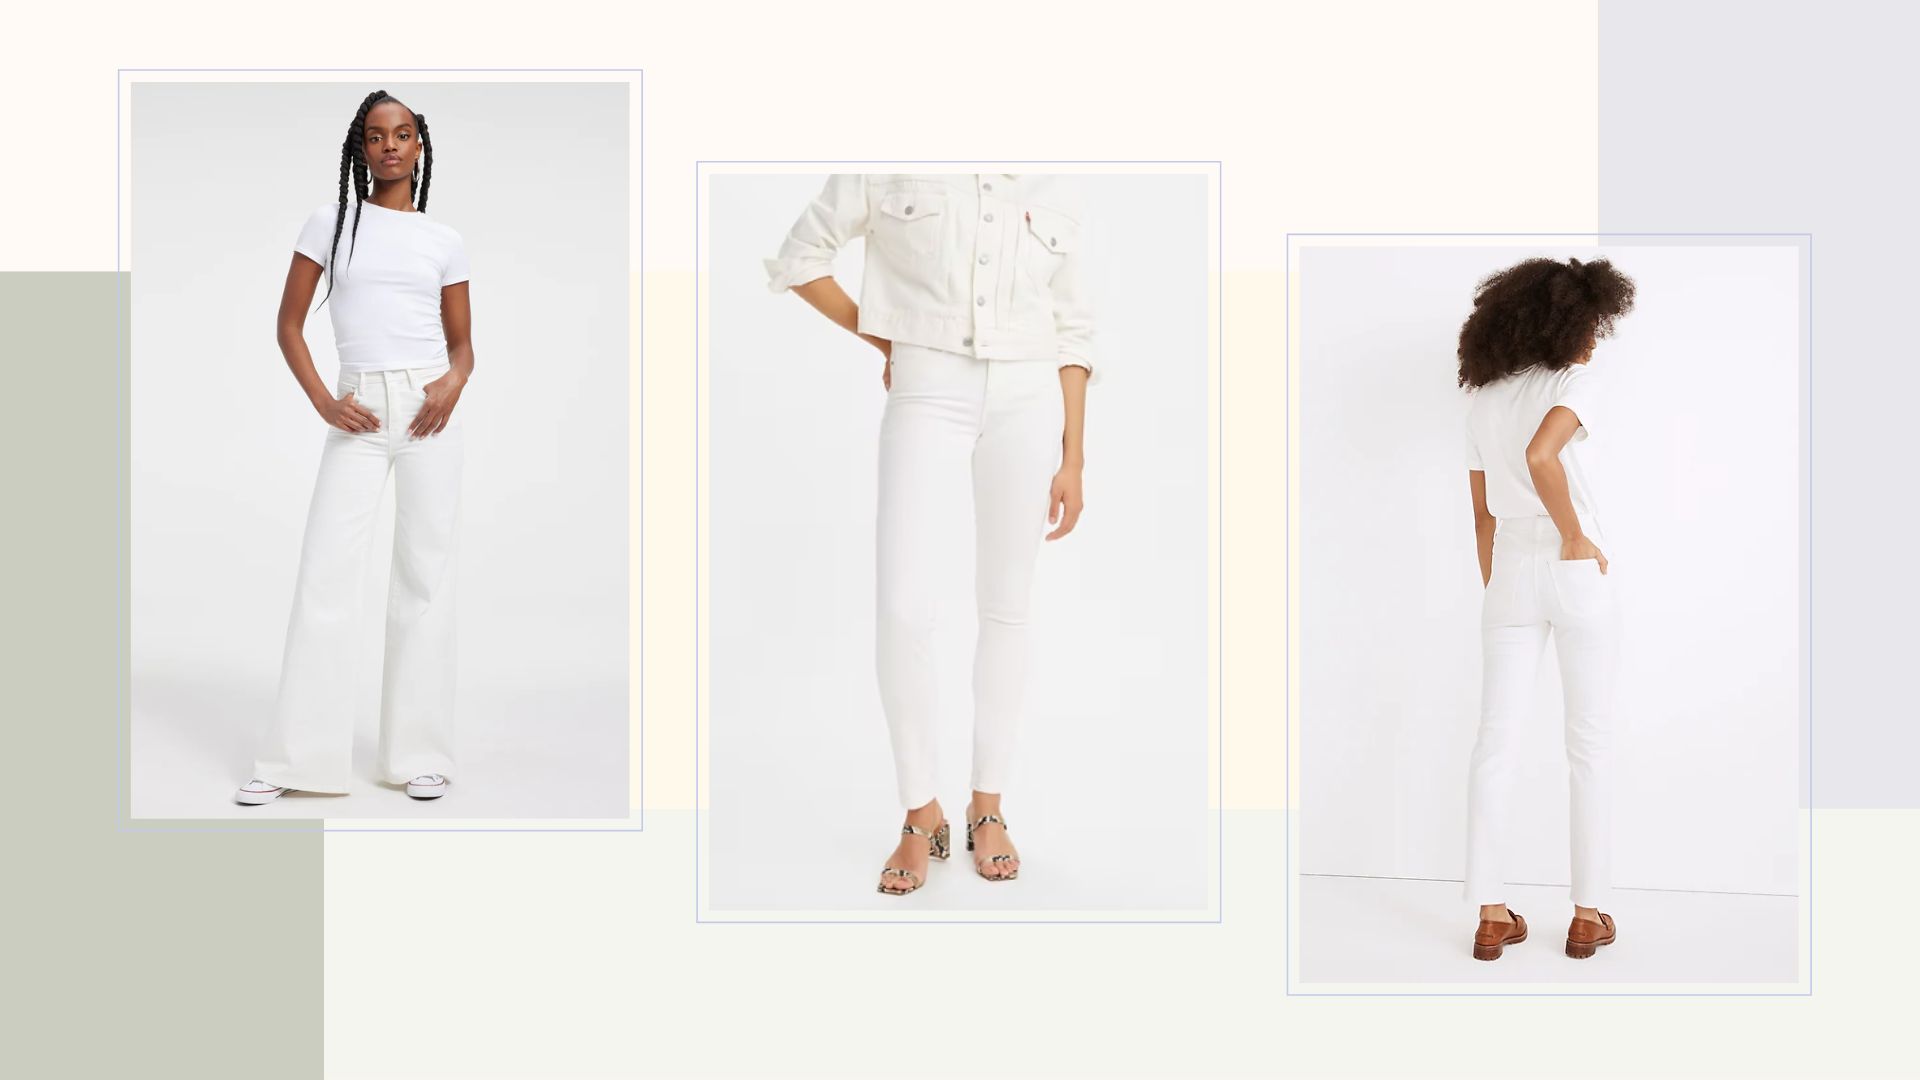 White Jeans for Women